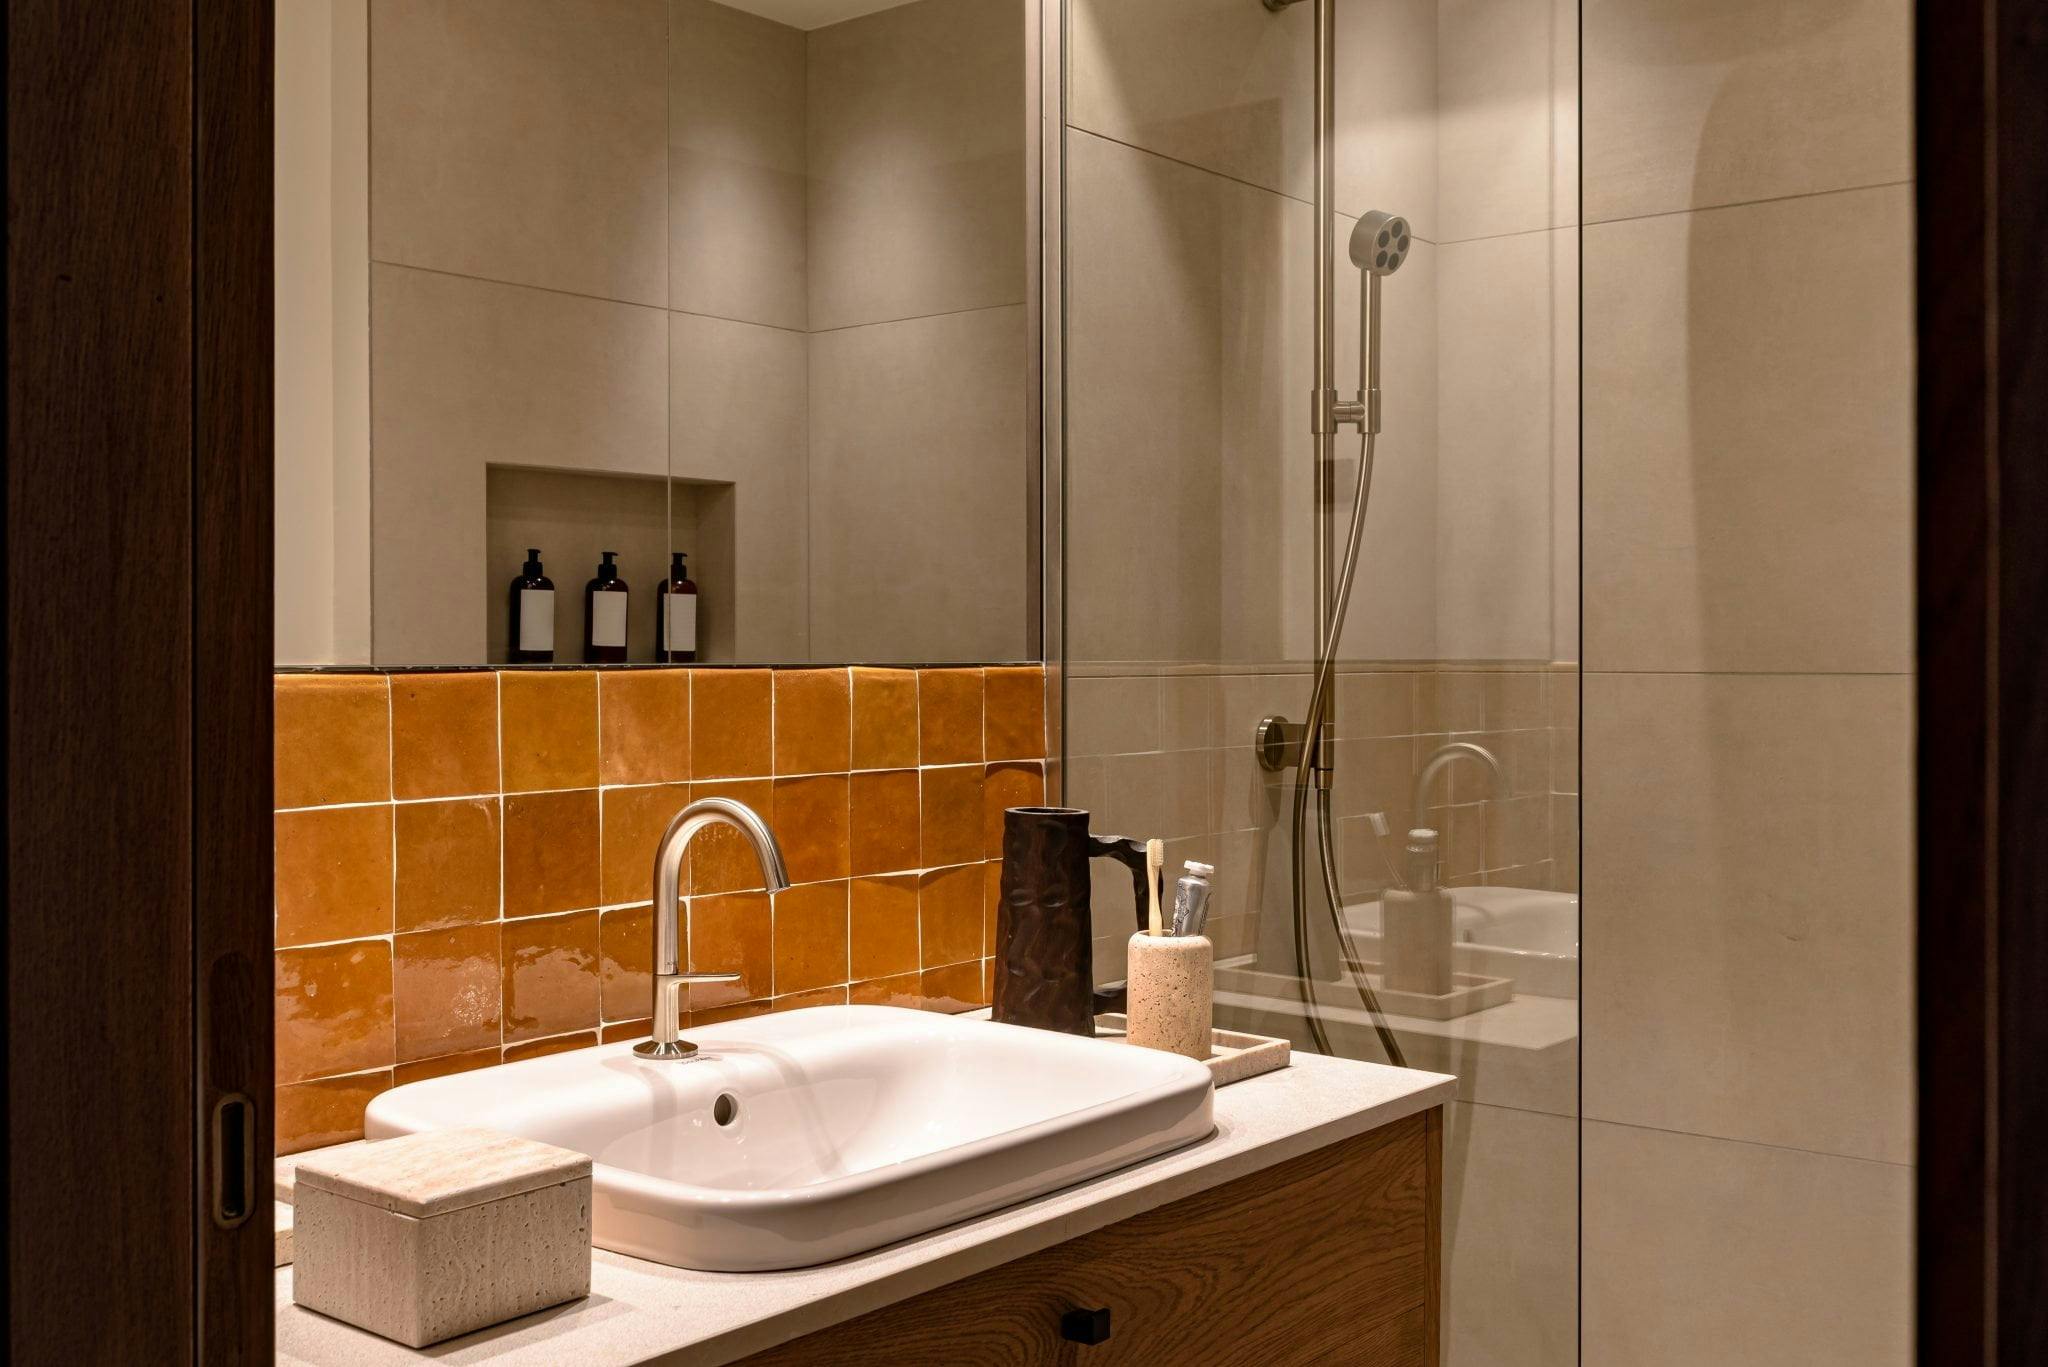 Orange tiles decored bathroom and shower at Le 1550